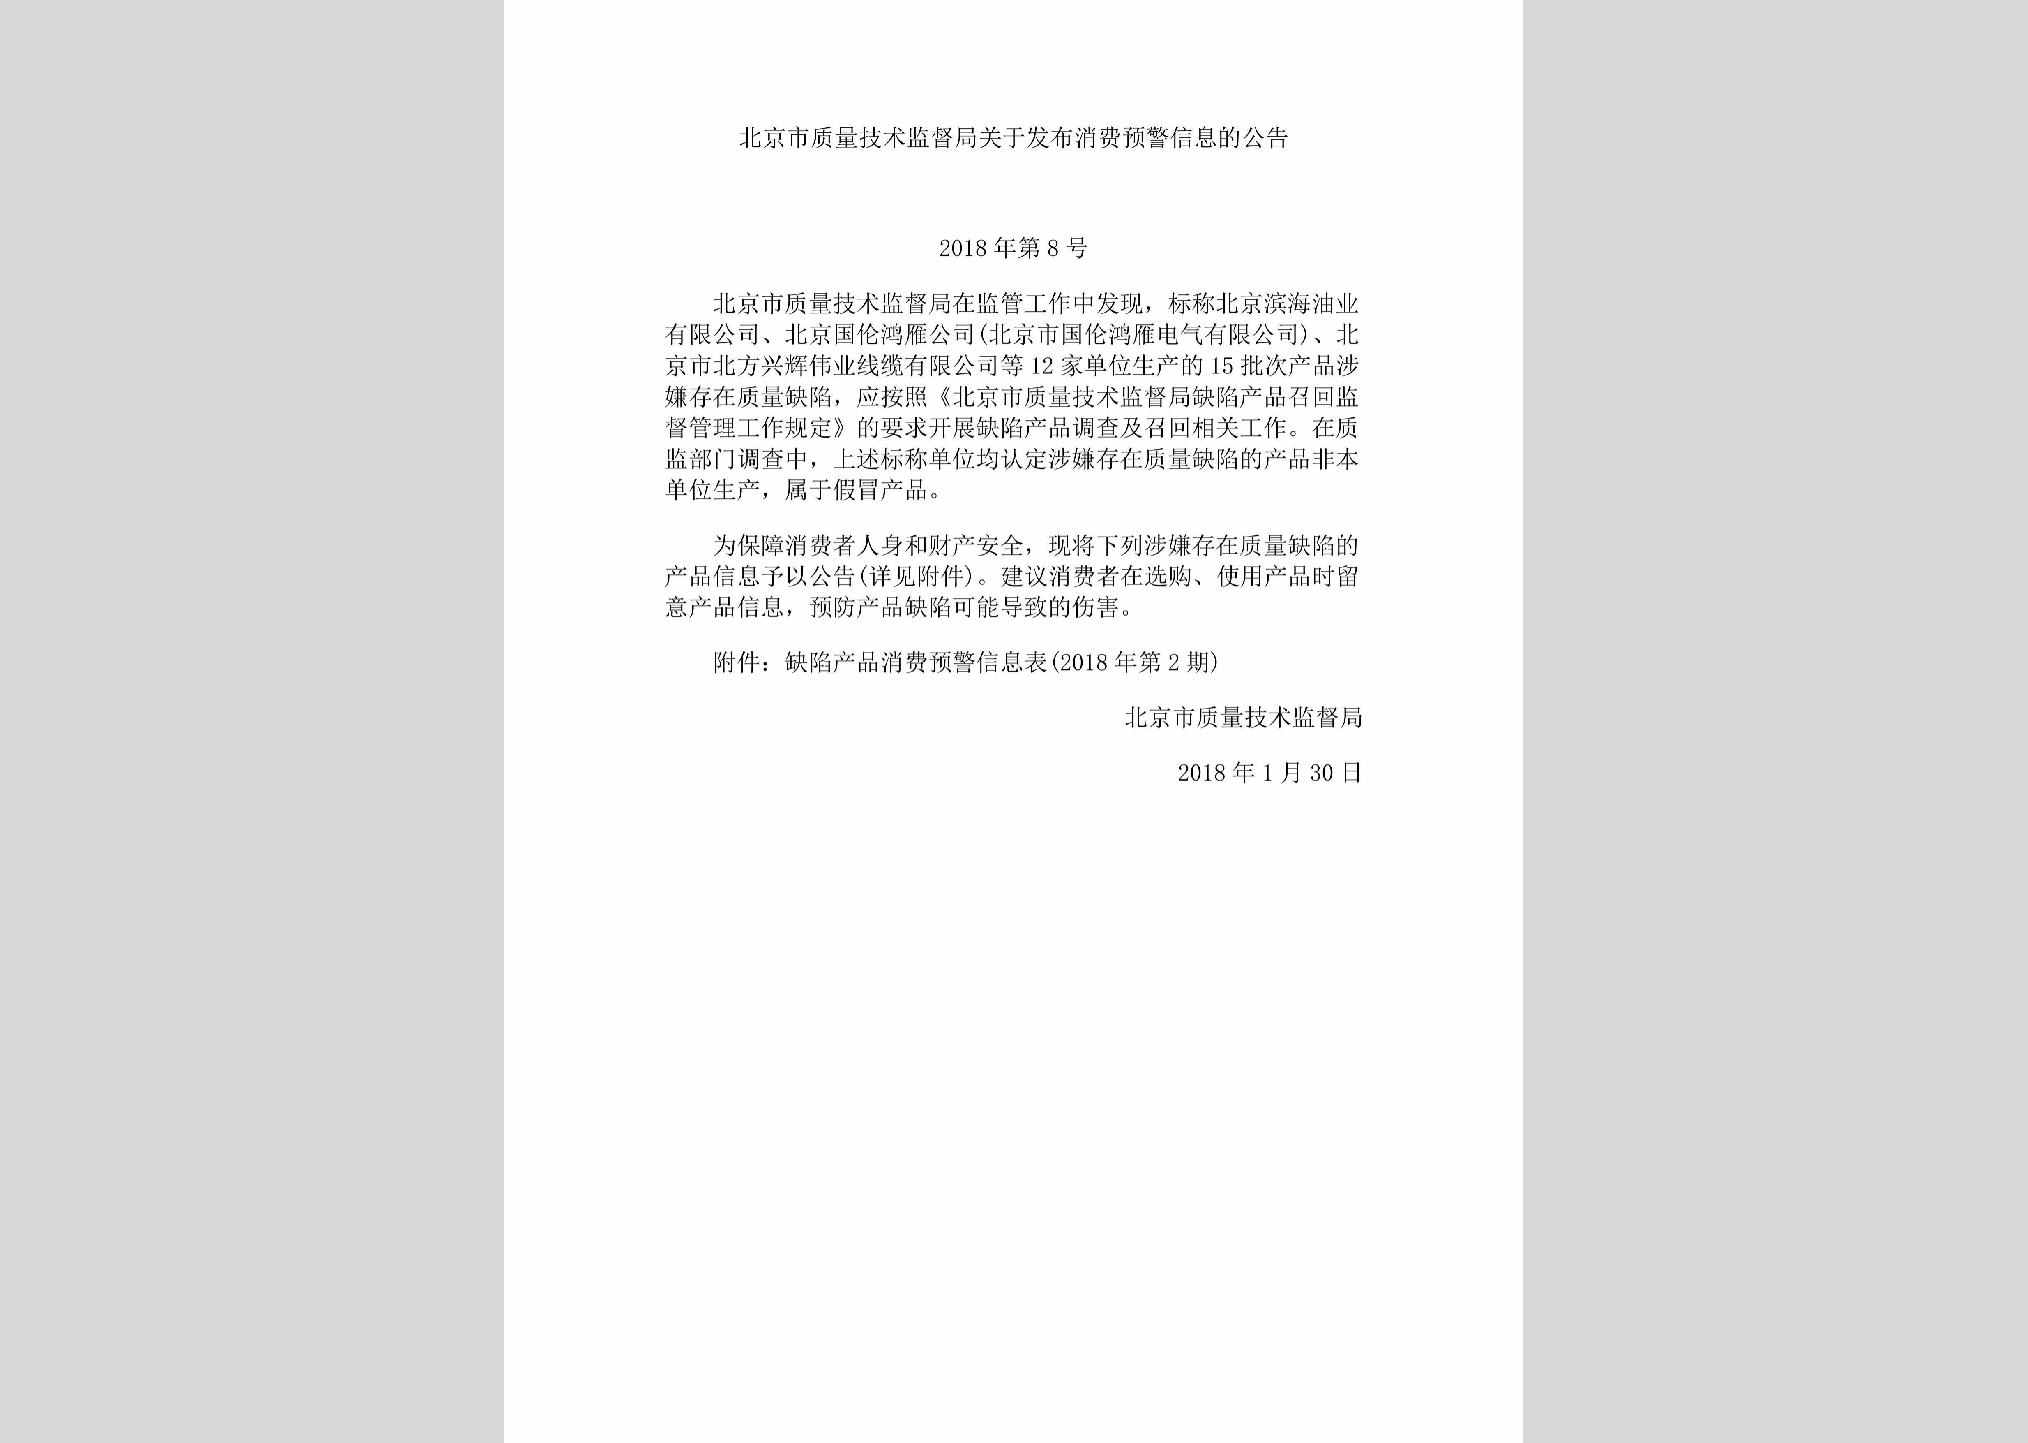 BJ-ZLFBYJGG-2018：北京市质量技术监督局关于发布消费预警信息的公告